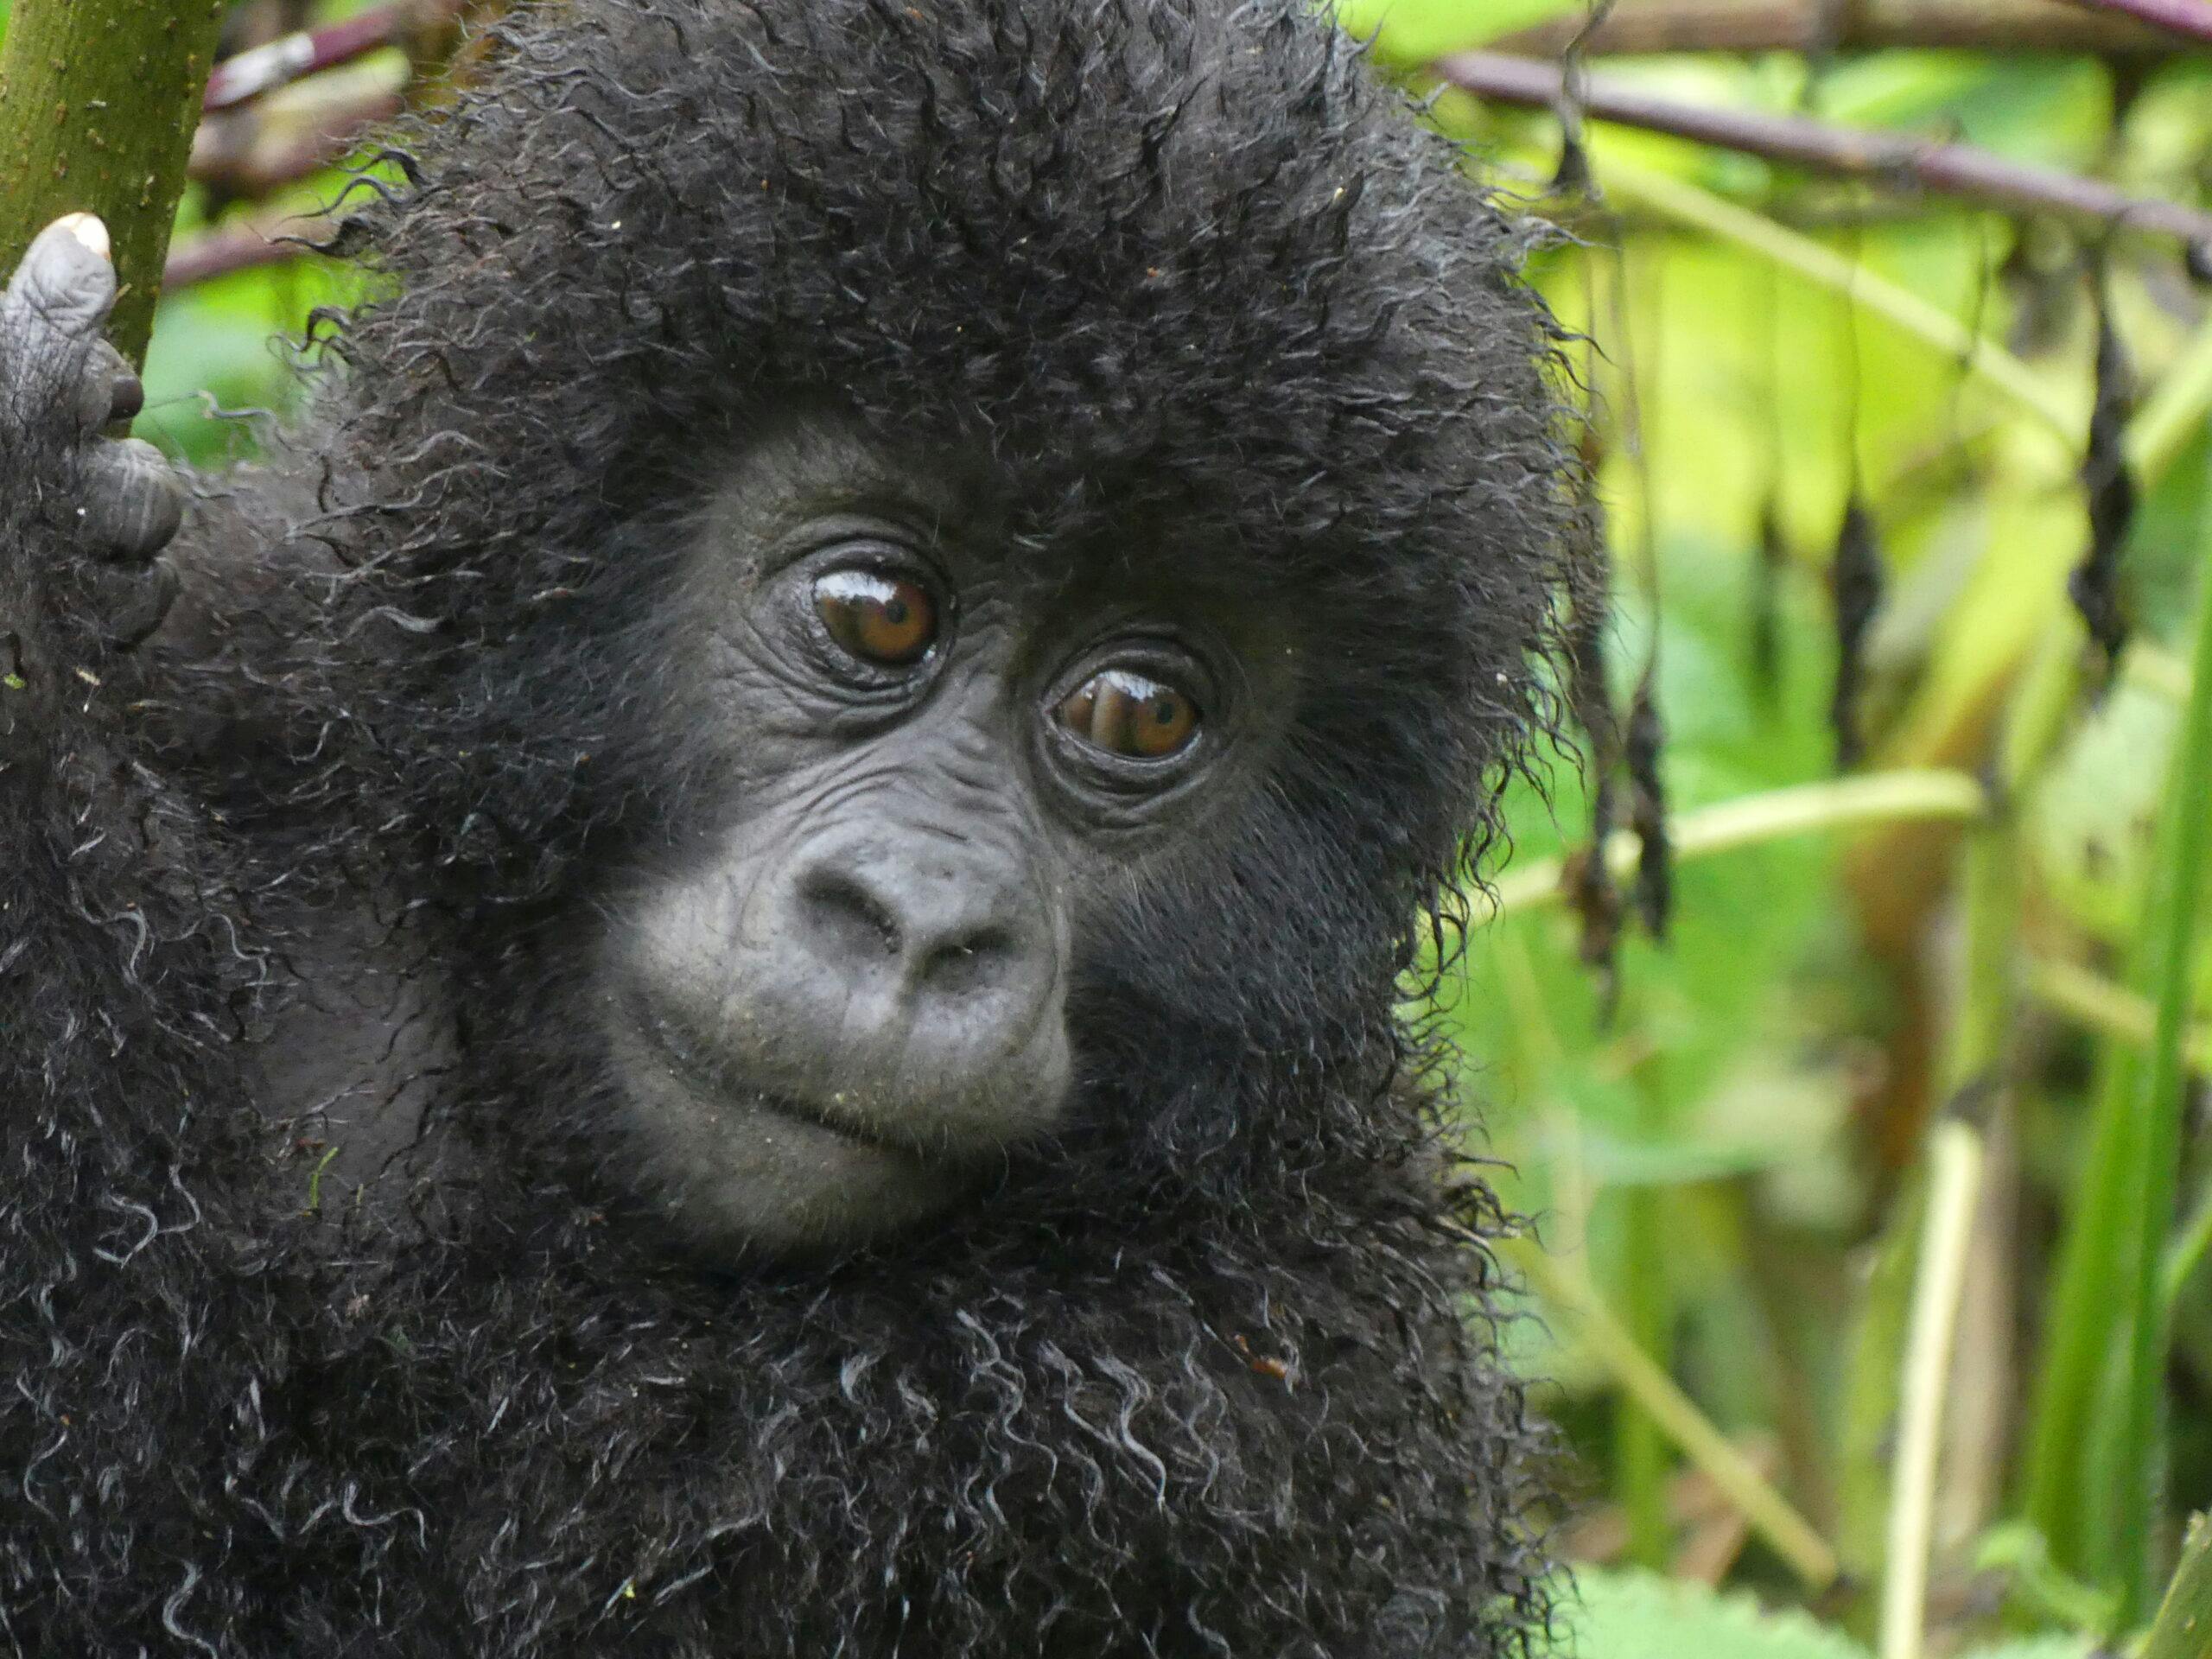 encountering baby gorilla in Bwindi Forest while gorilla trekking in Rwanda, Africa